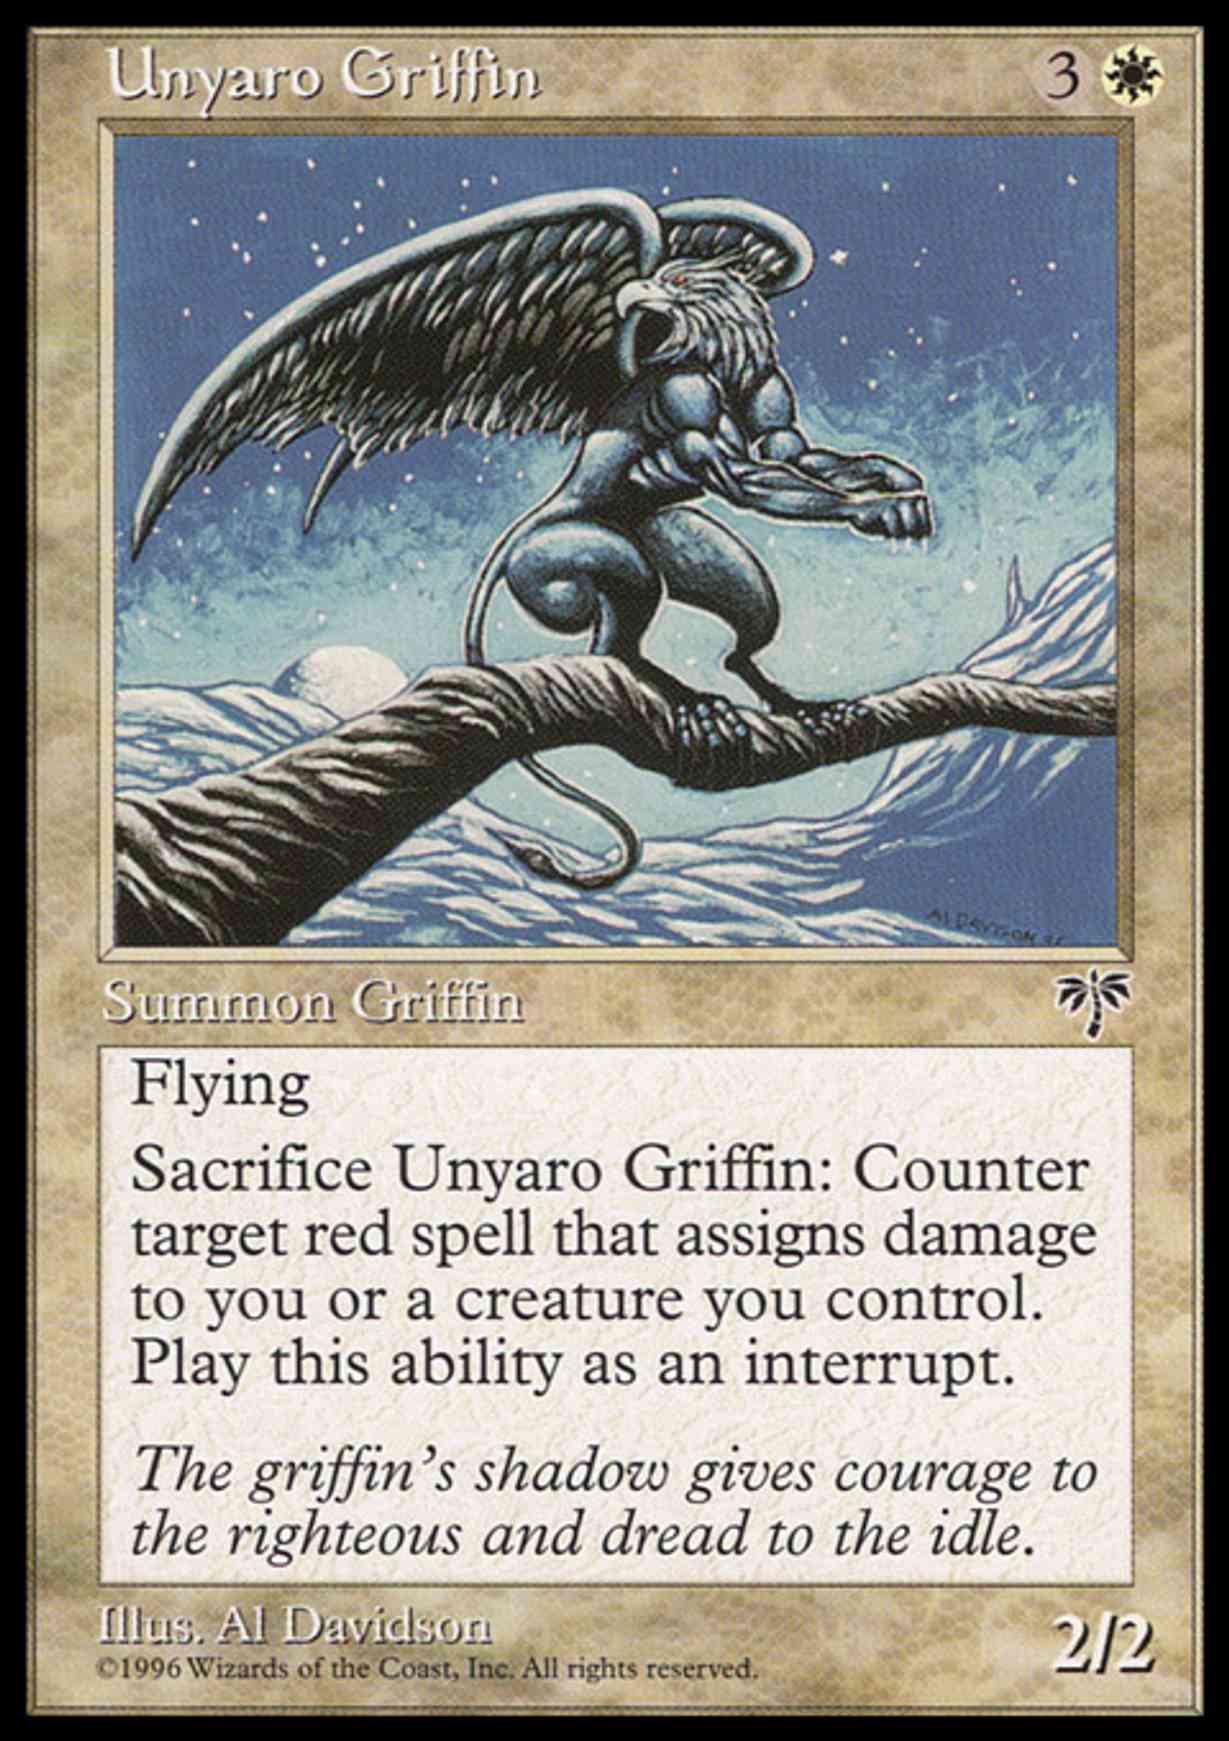 Unyaro Griffin magic card front